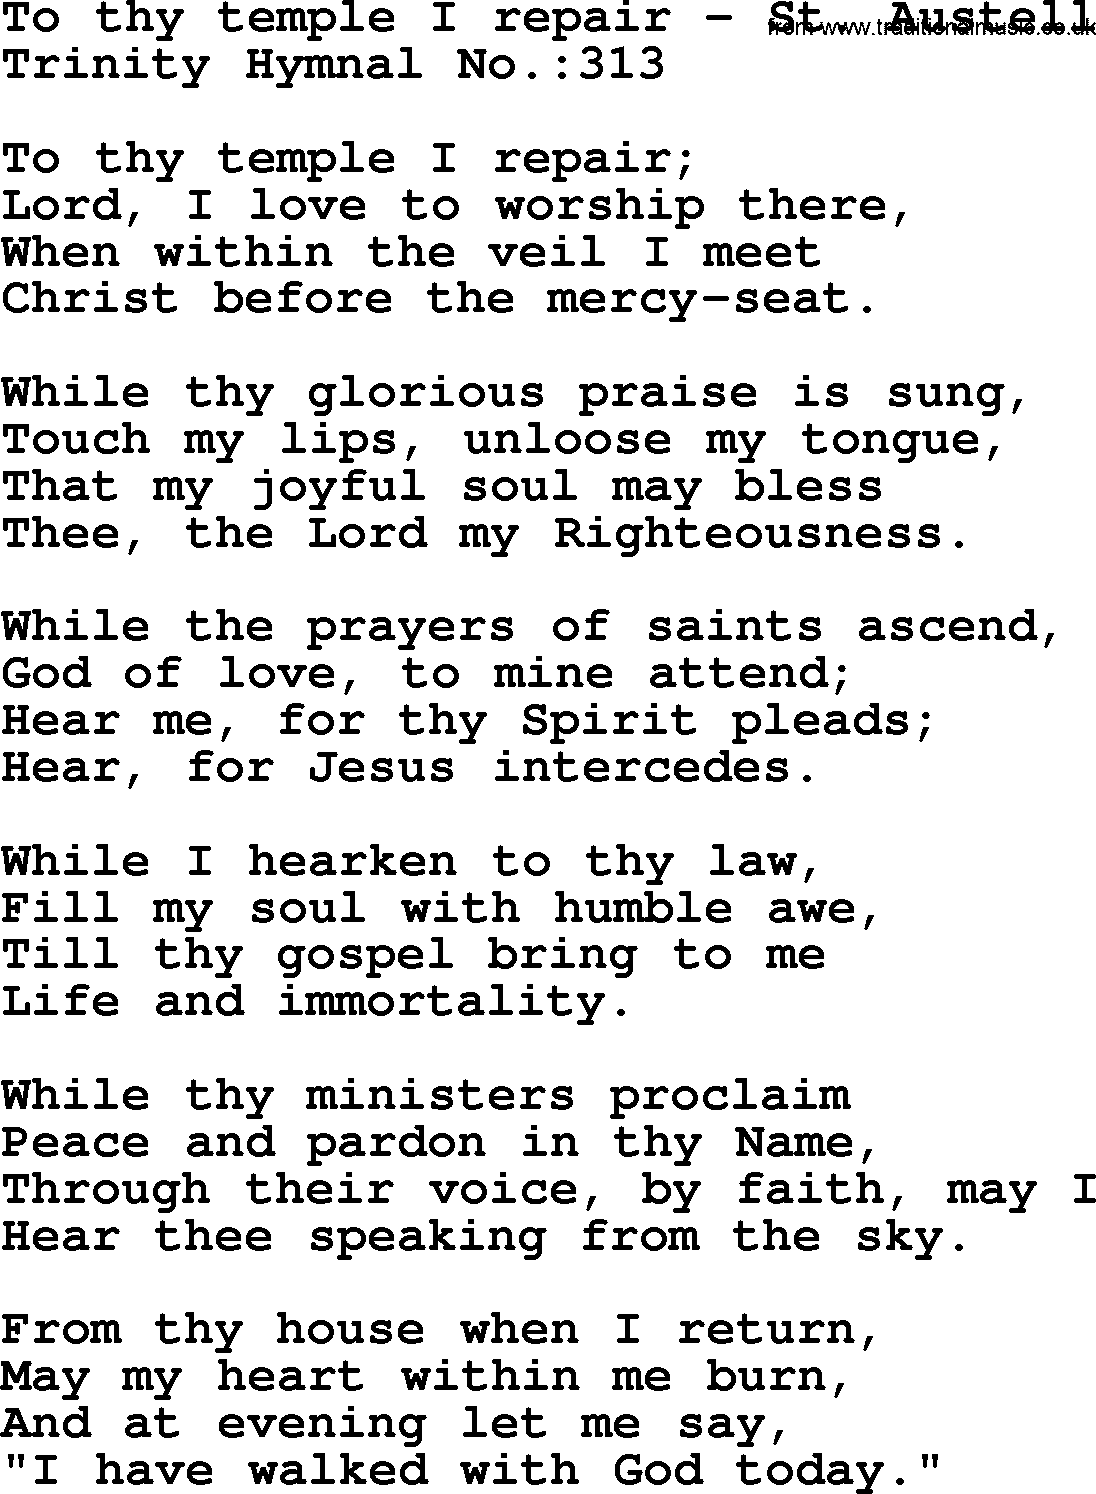 Trinity Hymnal Hymn: To Thy Temple I Repair--St. Austell, lyrics with midi music